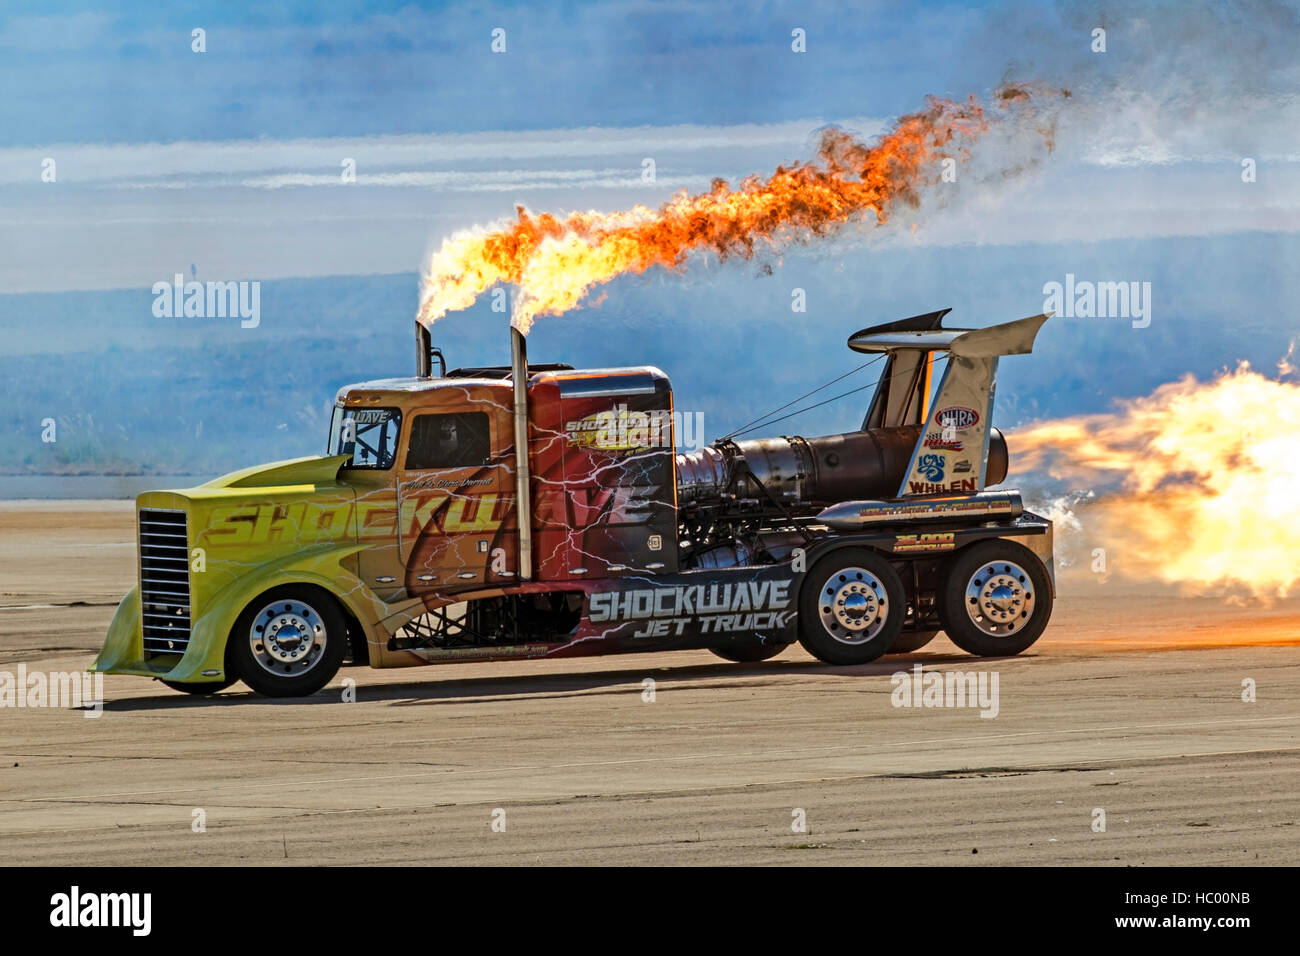 Jet truck Shockwave drag racer at 2016 Miramar Air Show in San Diego, California Stock Photo